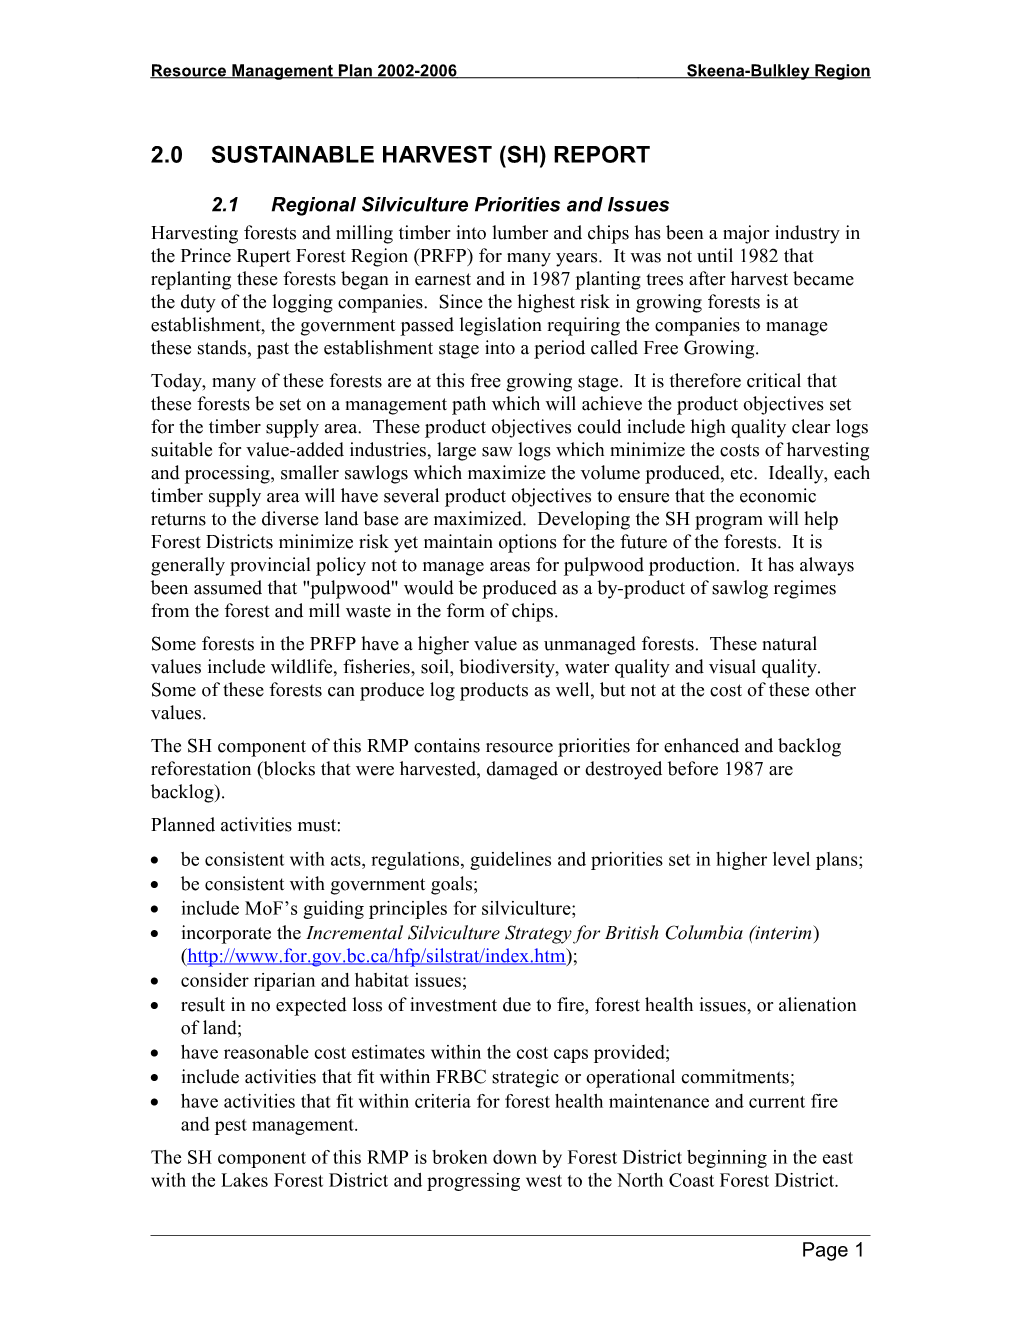 Resource Management Plan 2002-2006Skeena-Bulkley Region